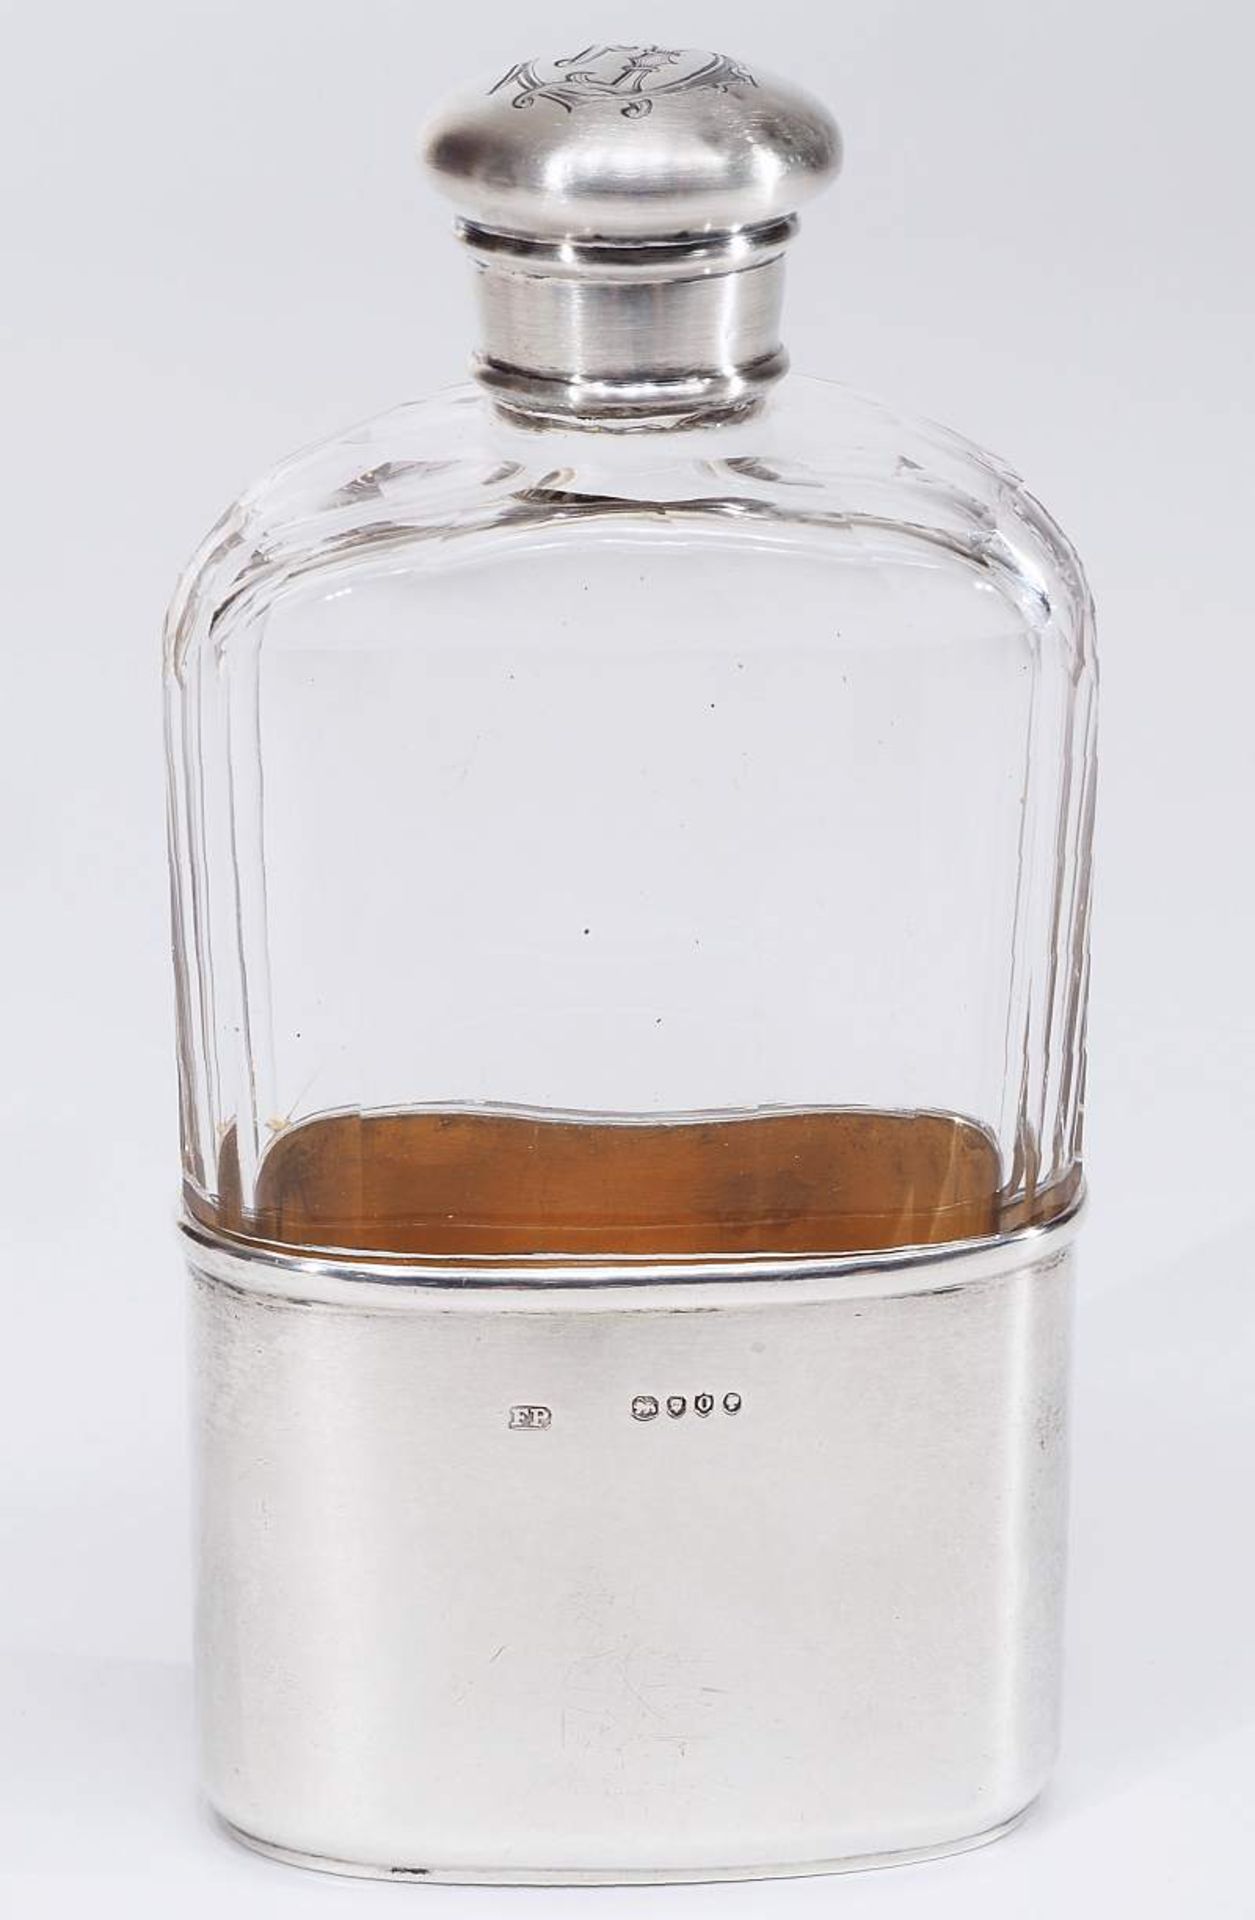 Englische Schnapsflasche. Englische Schnapsflasche. LONDON 1889, Sterlingsilber. Farbloses Glas - Image 3 of 5